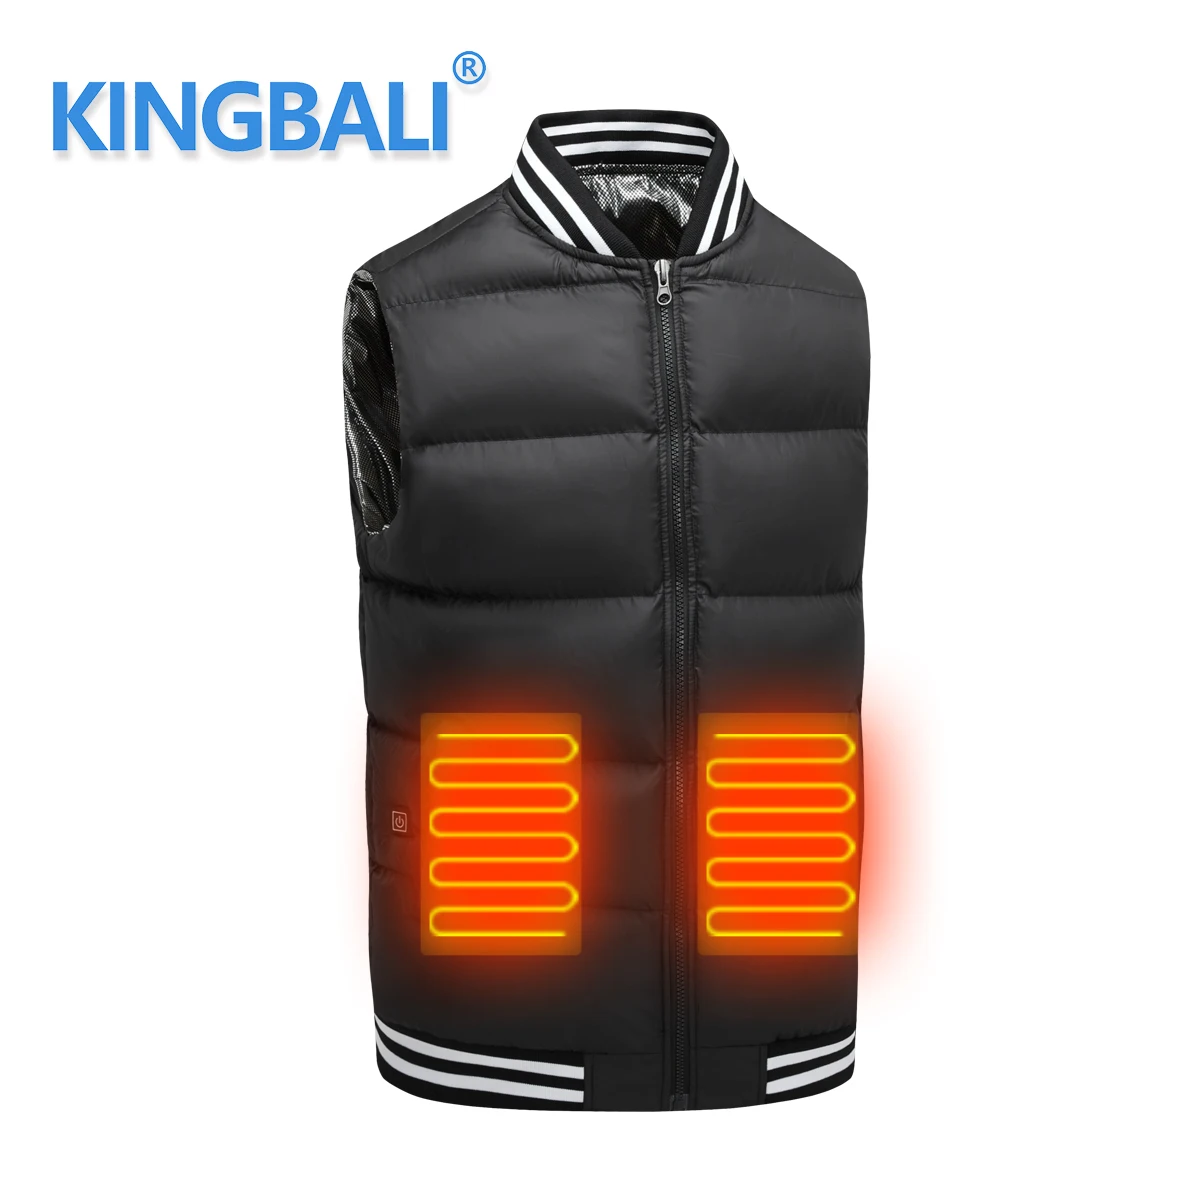 

Kingbali Customized Winter heat clothing police heating jacket, Black/red/white